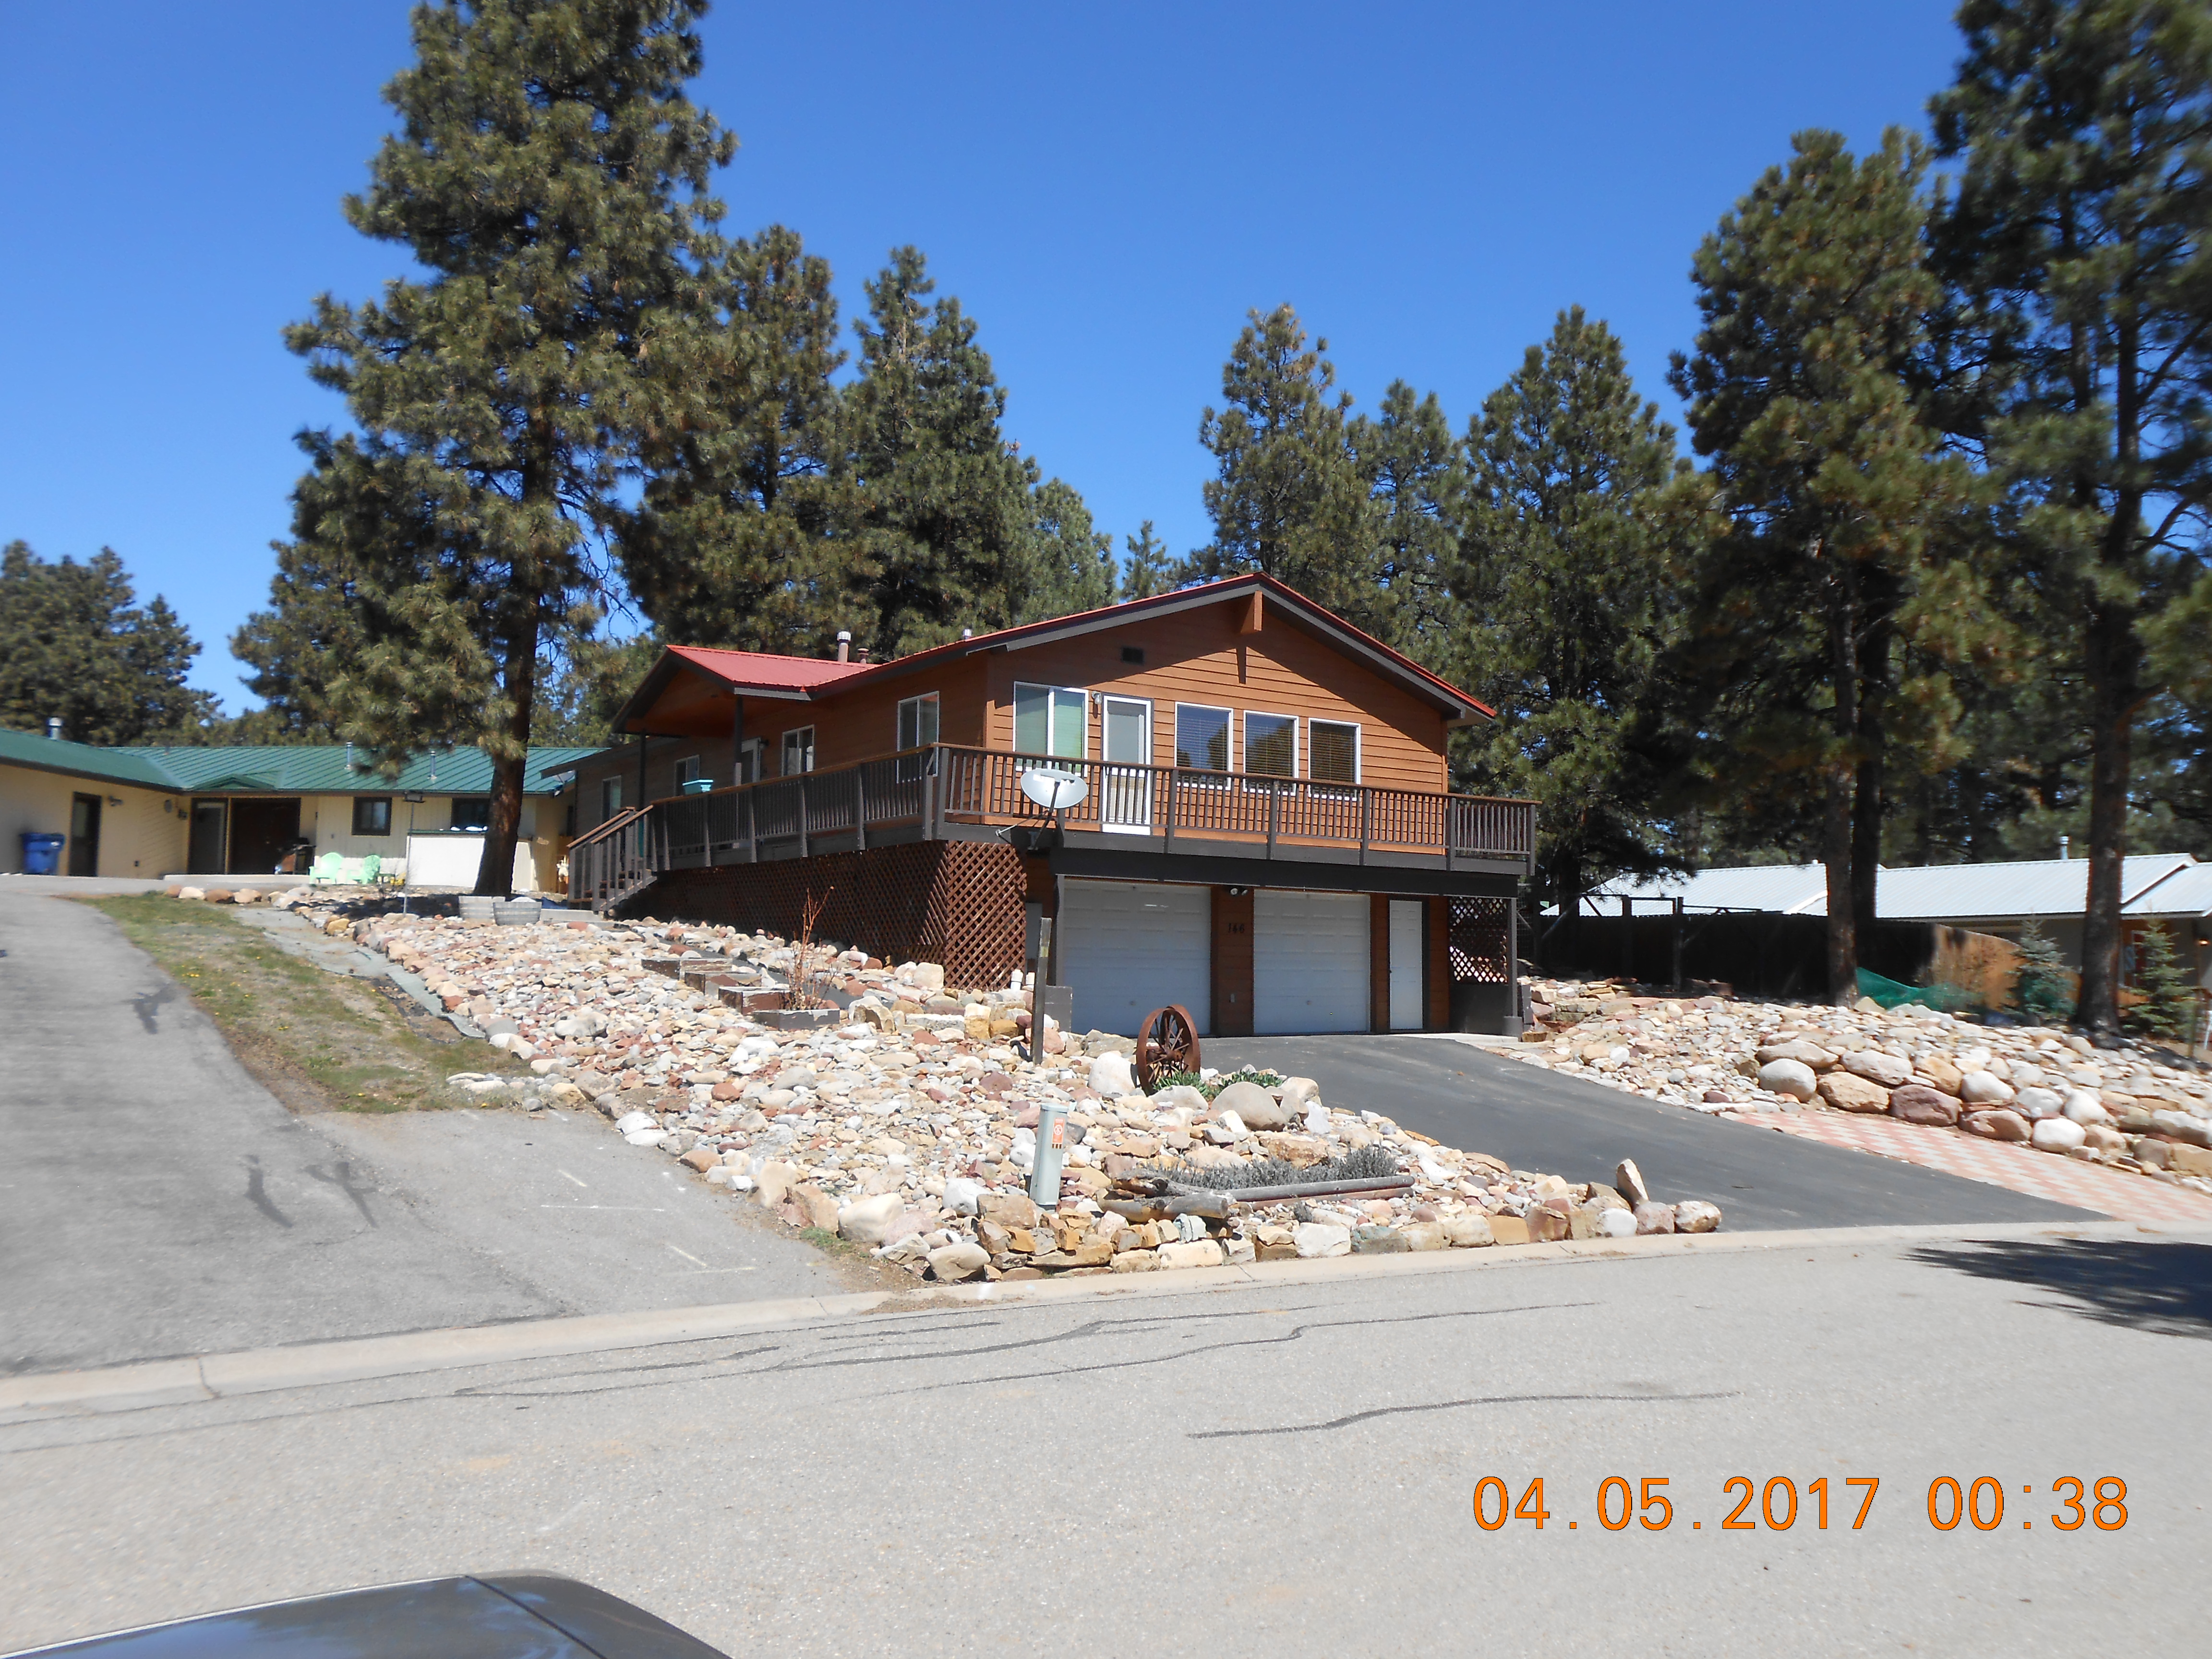 DSCN1376 - Real Estate Durango Colorado | Durango Real Estate Network